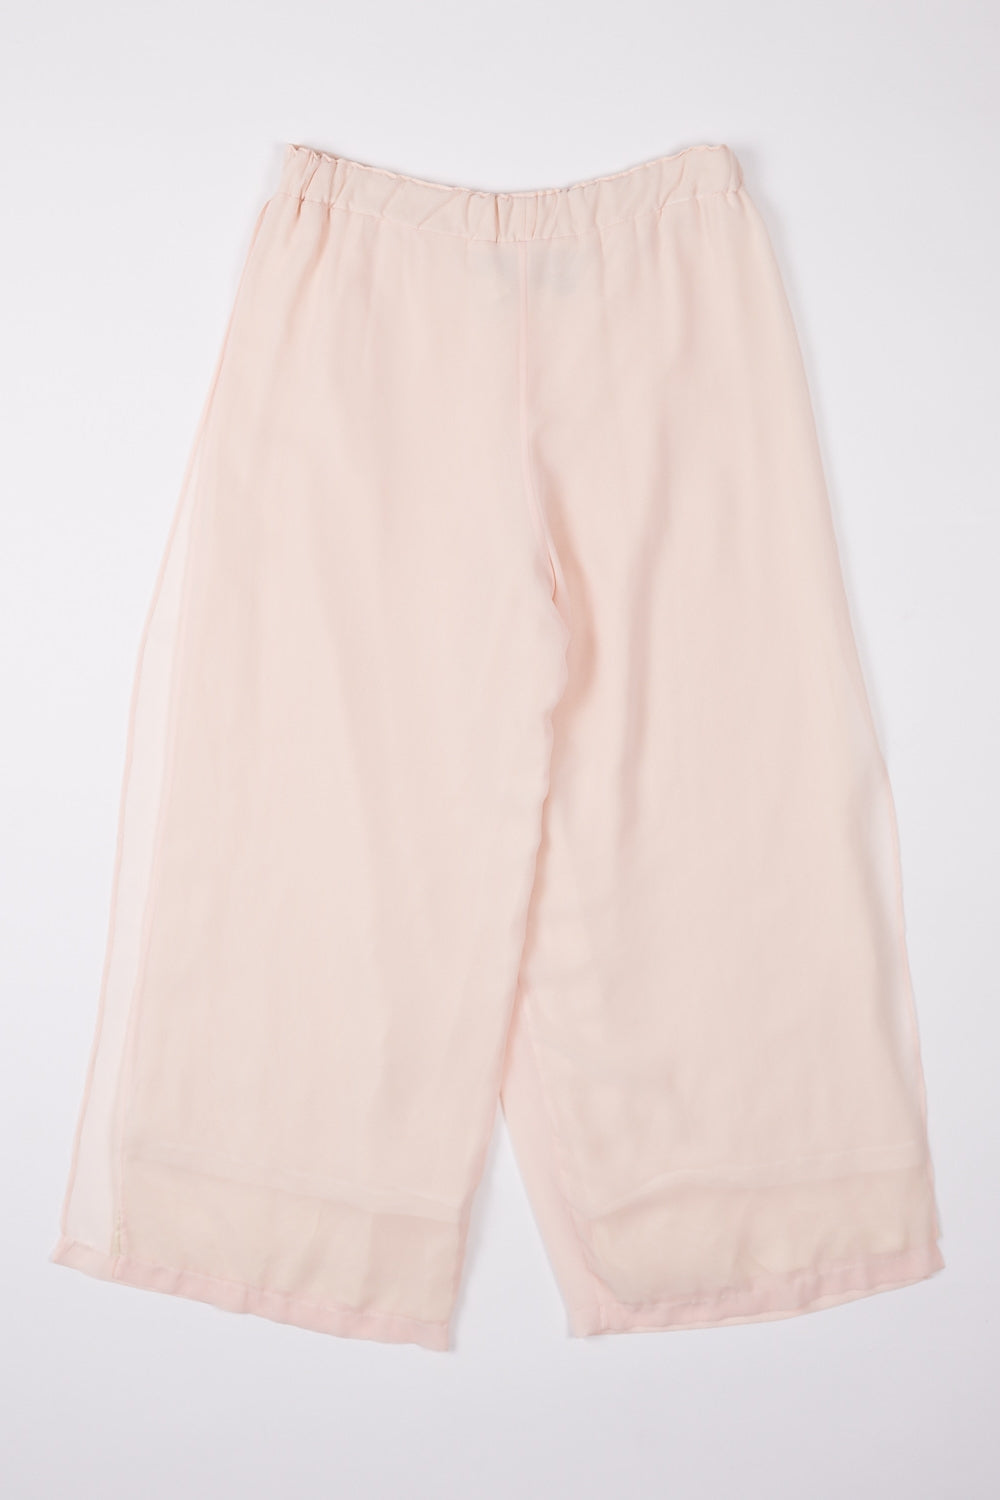 Dusty York Pink Silk Blend Pants M 